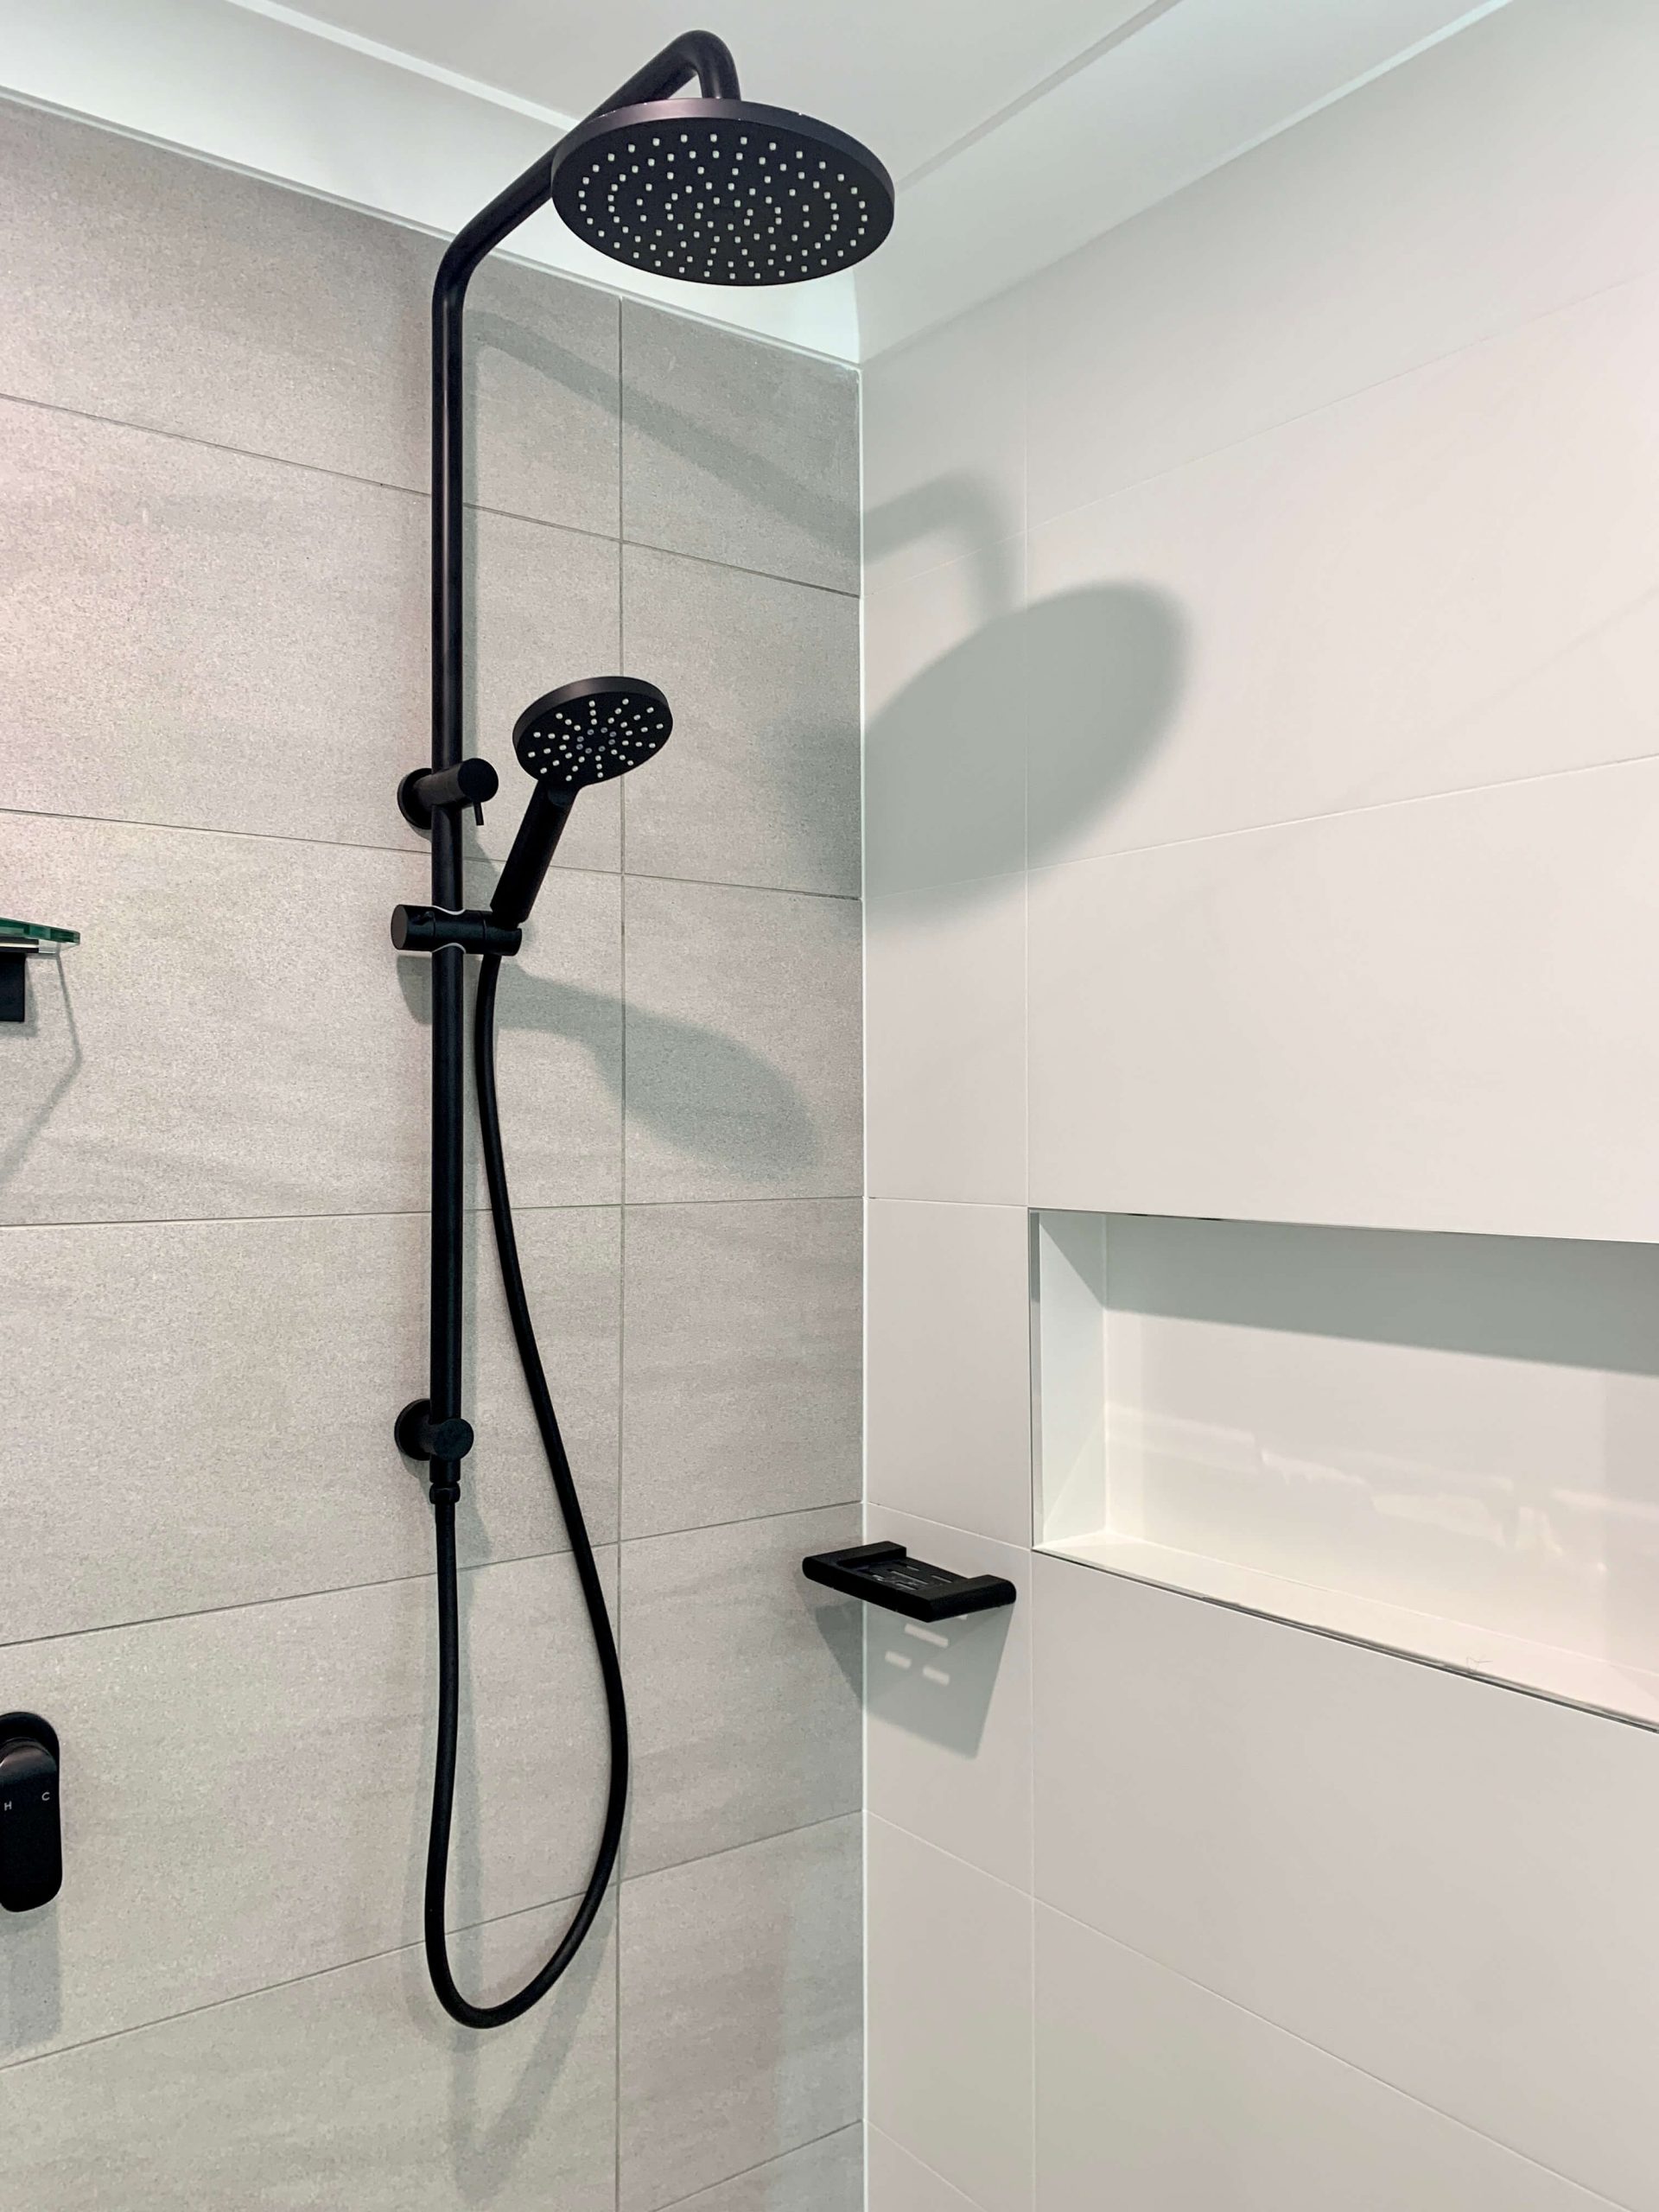 Shower recess with striking black matte tapware